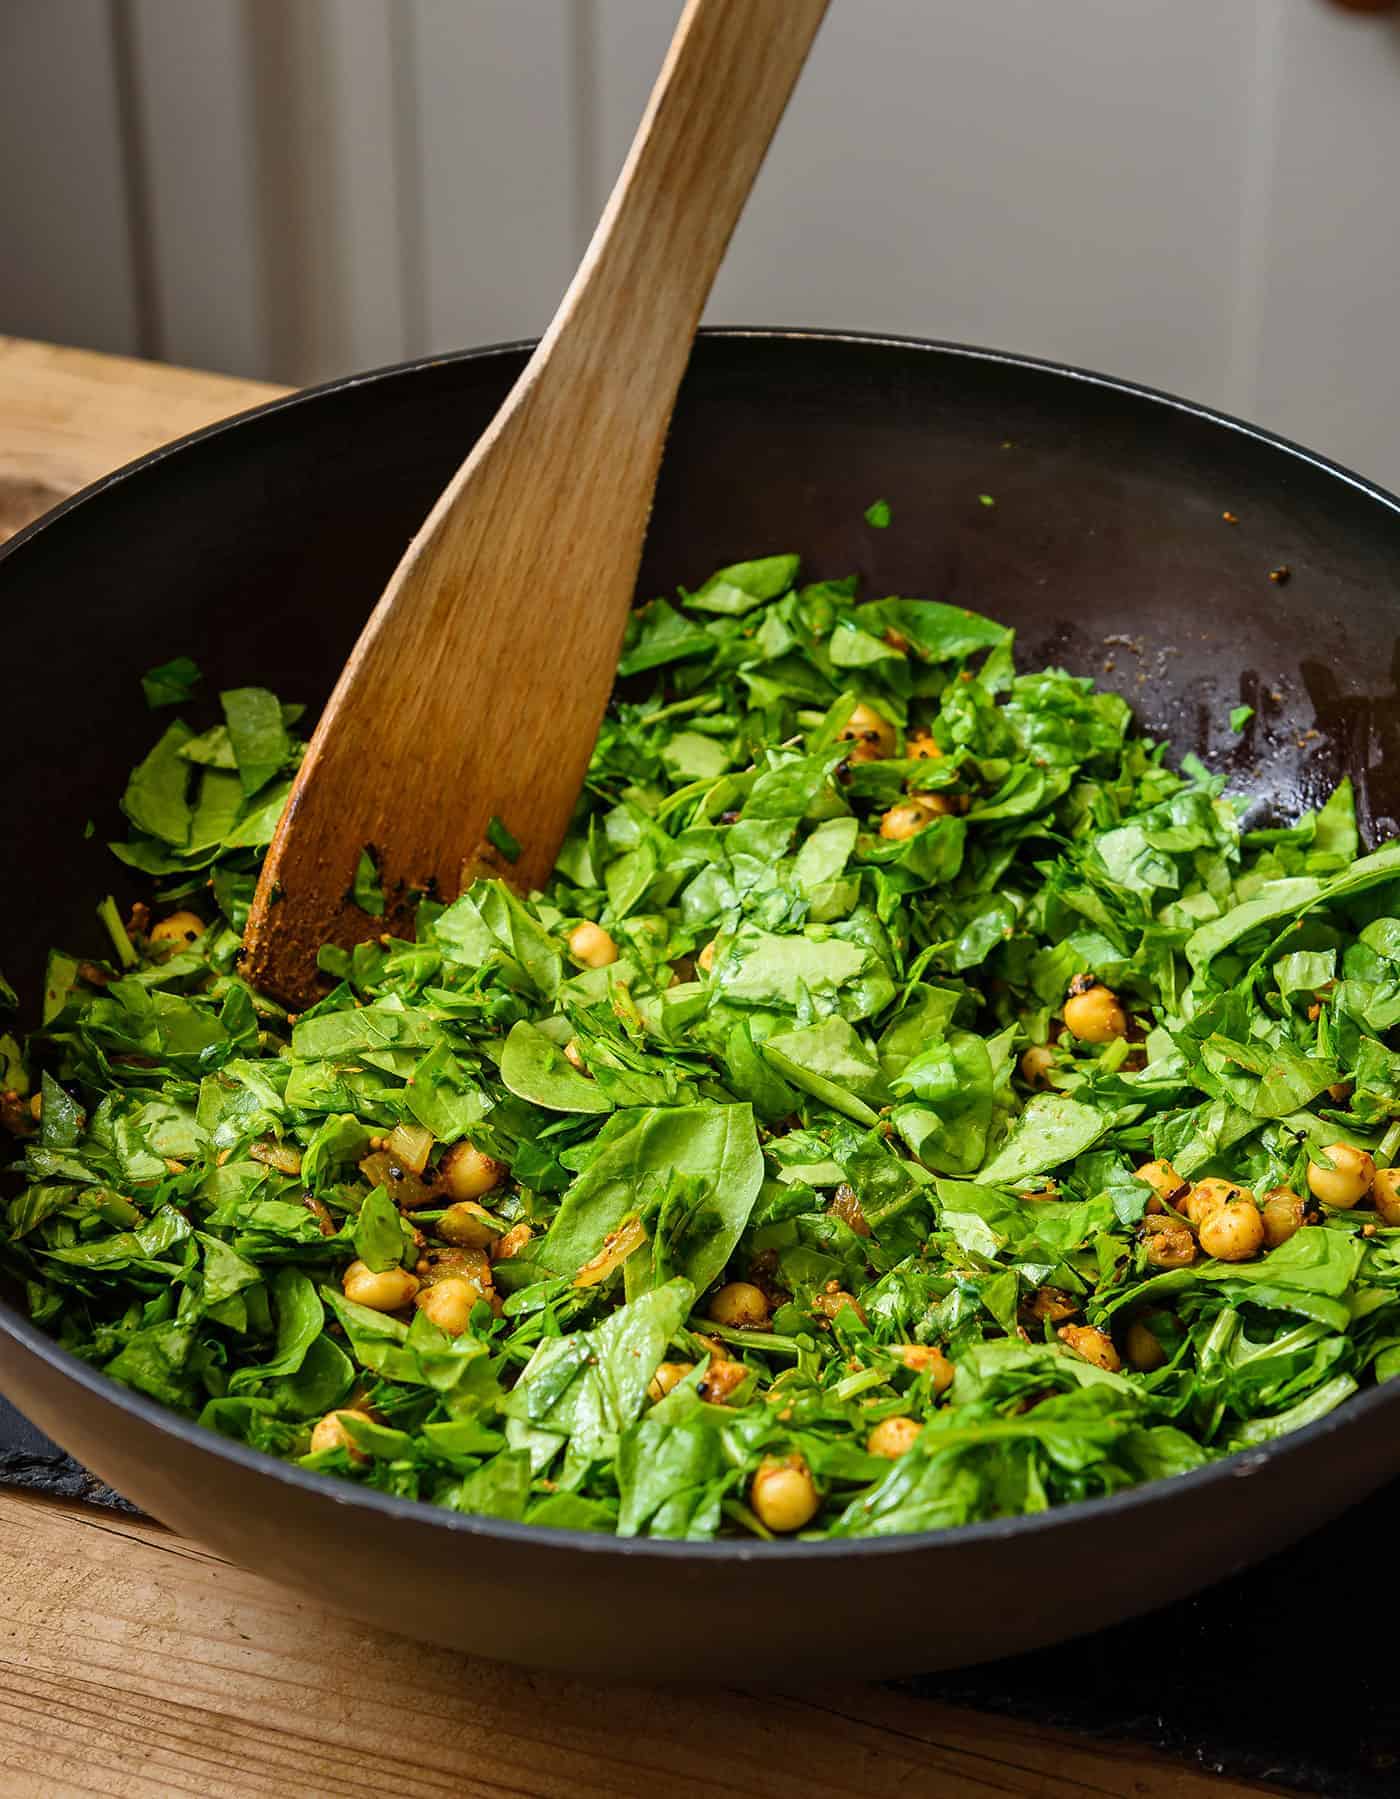 Stirring in spinach